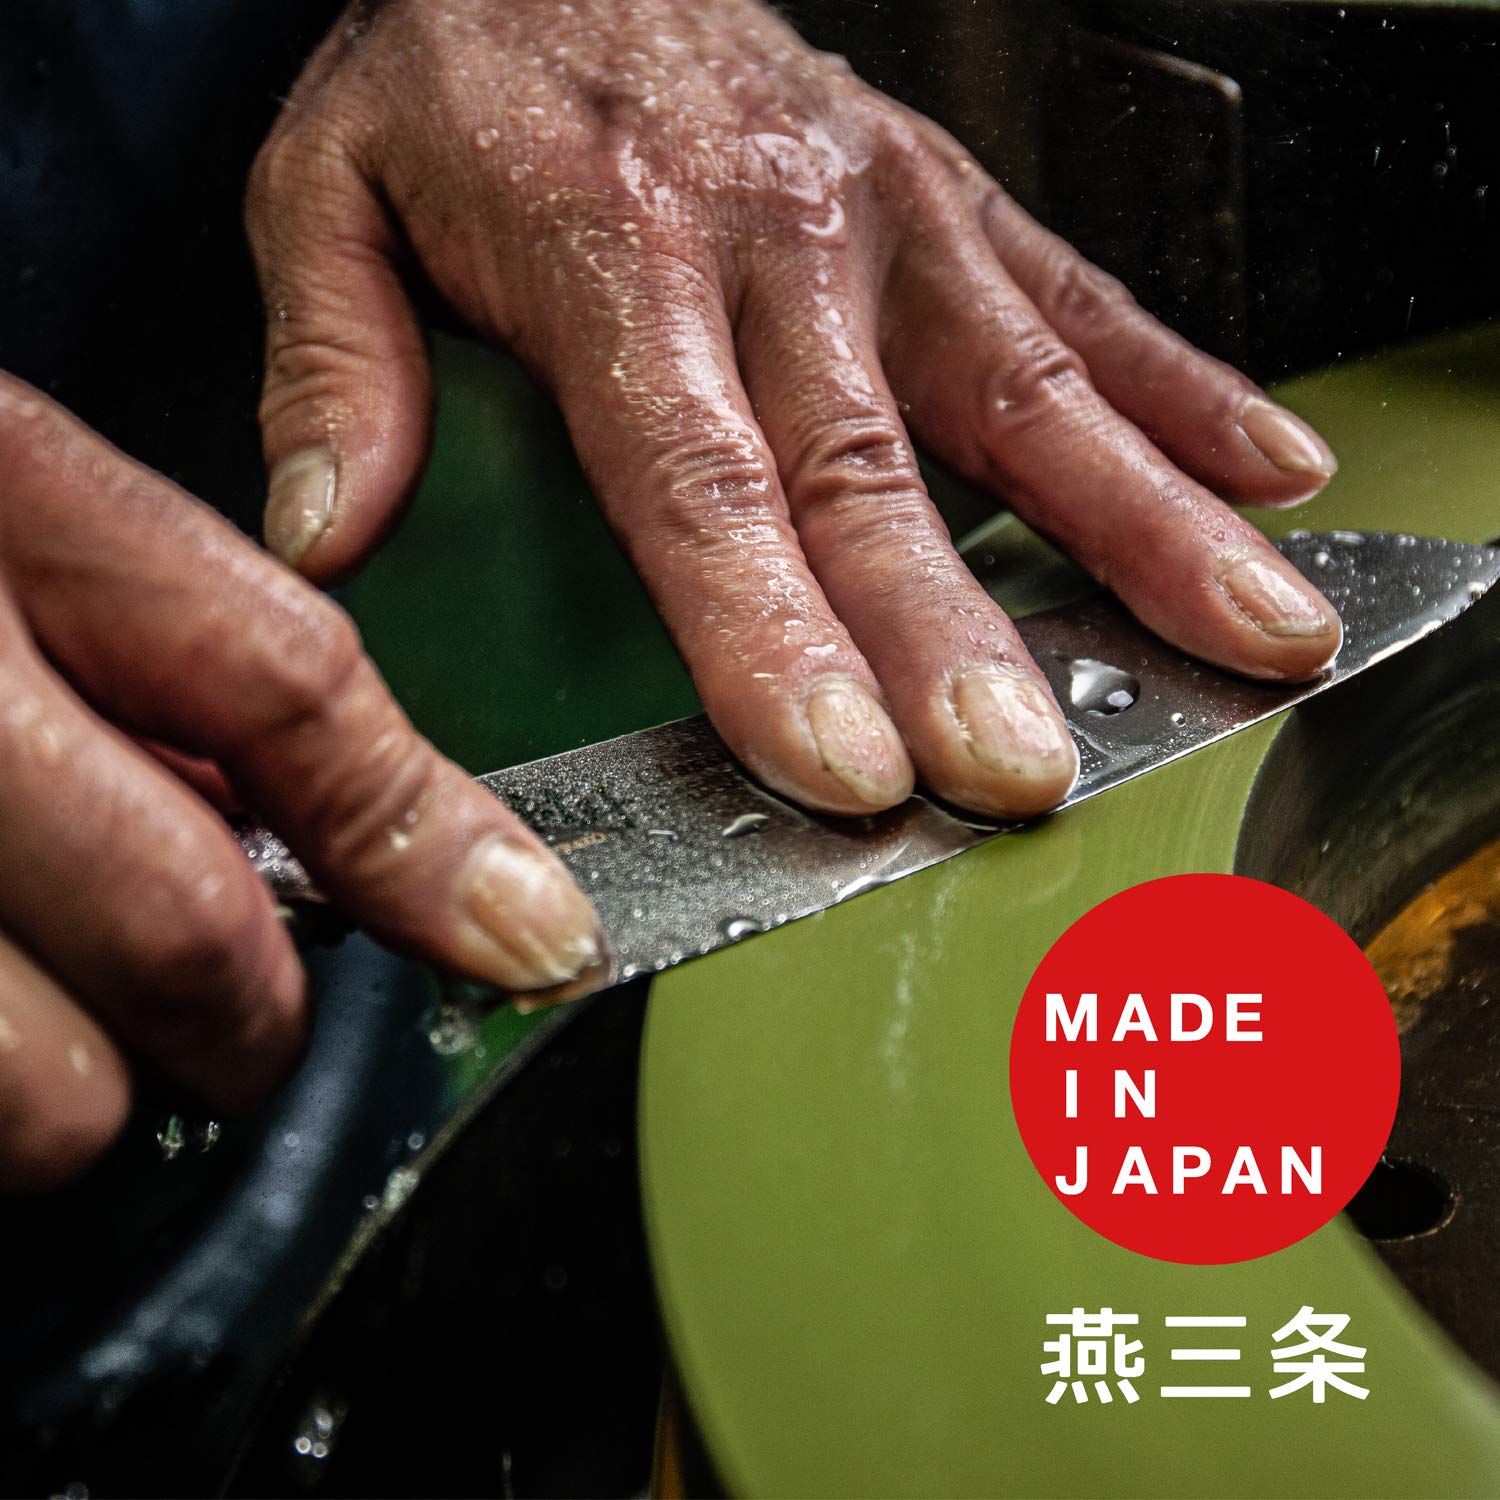 Shimomura Kogyo OVD-40 Santoku & Bread Knife Set (145/225mm Molybdenum Vanadium Steel Japan Made Dishwasher Safe)